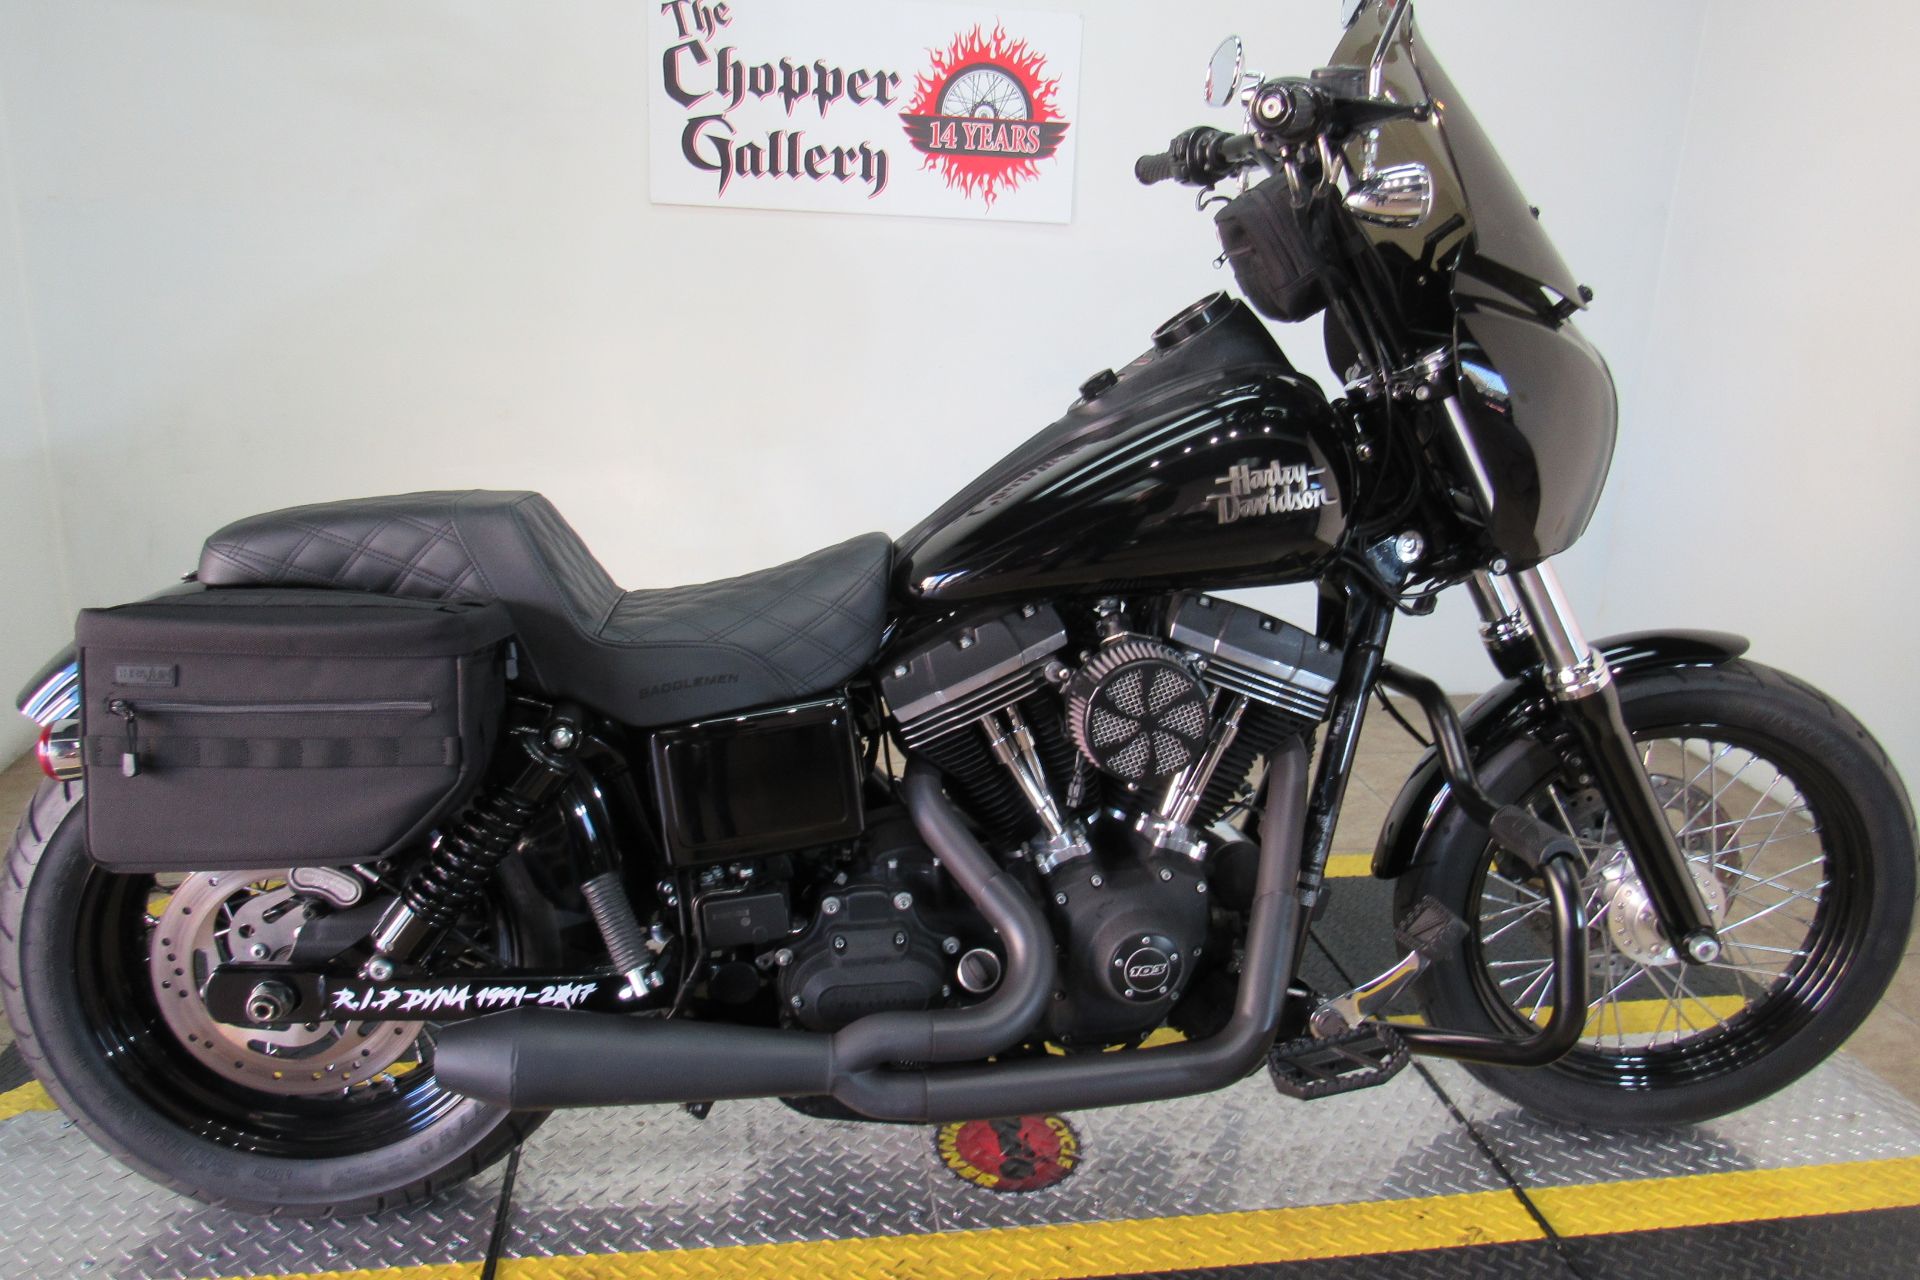 2014 Harley-Davidson Dyna® Street Bob® in Temecula, California - Photo 5